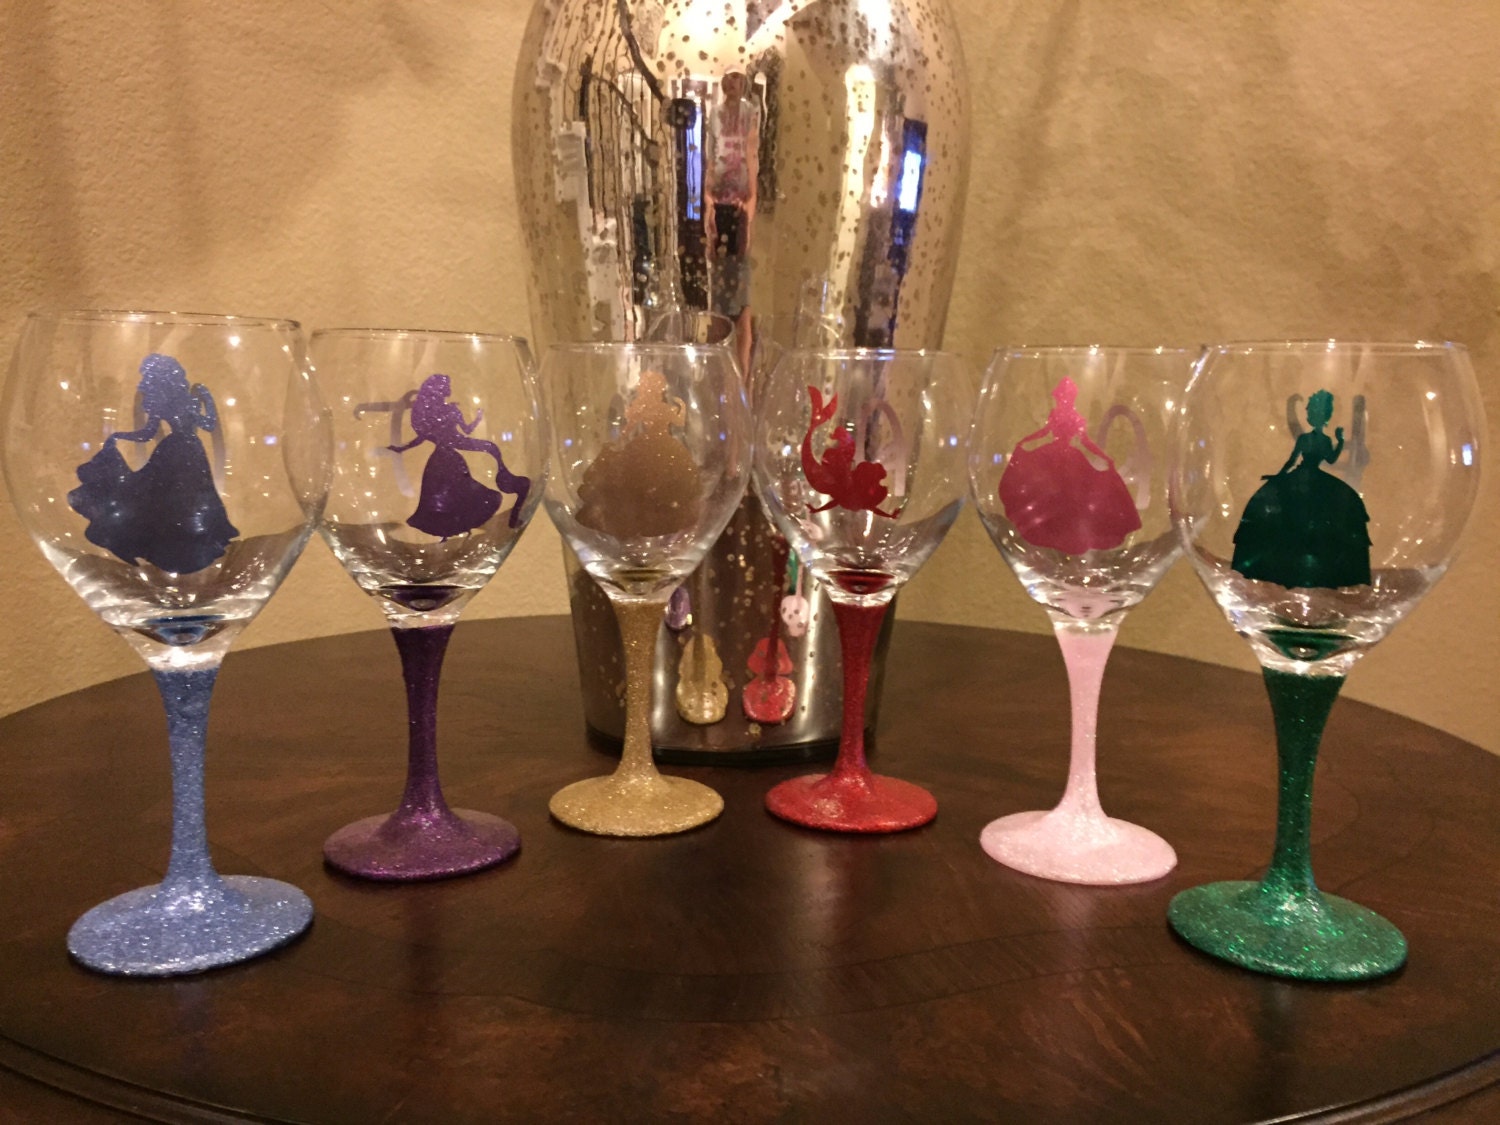 Choose one Disney Princess Wine Glasses with a Glittered Stem